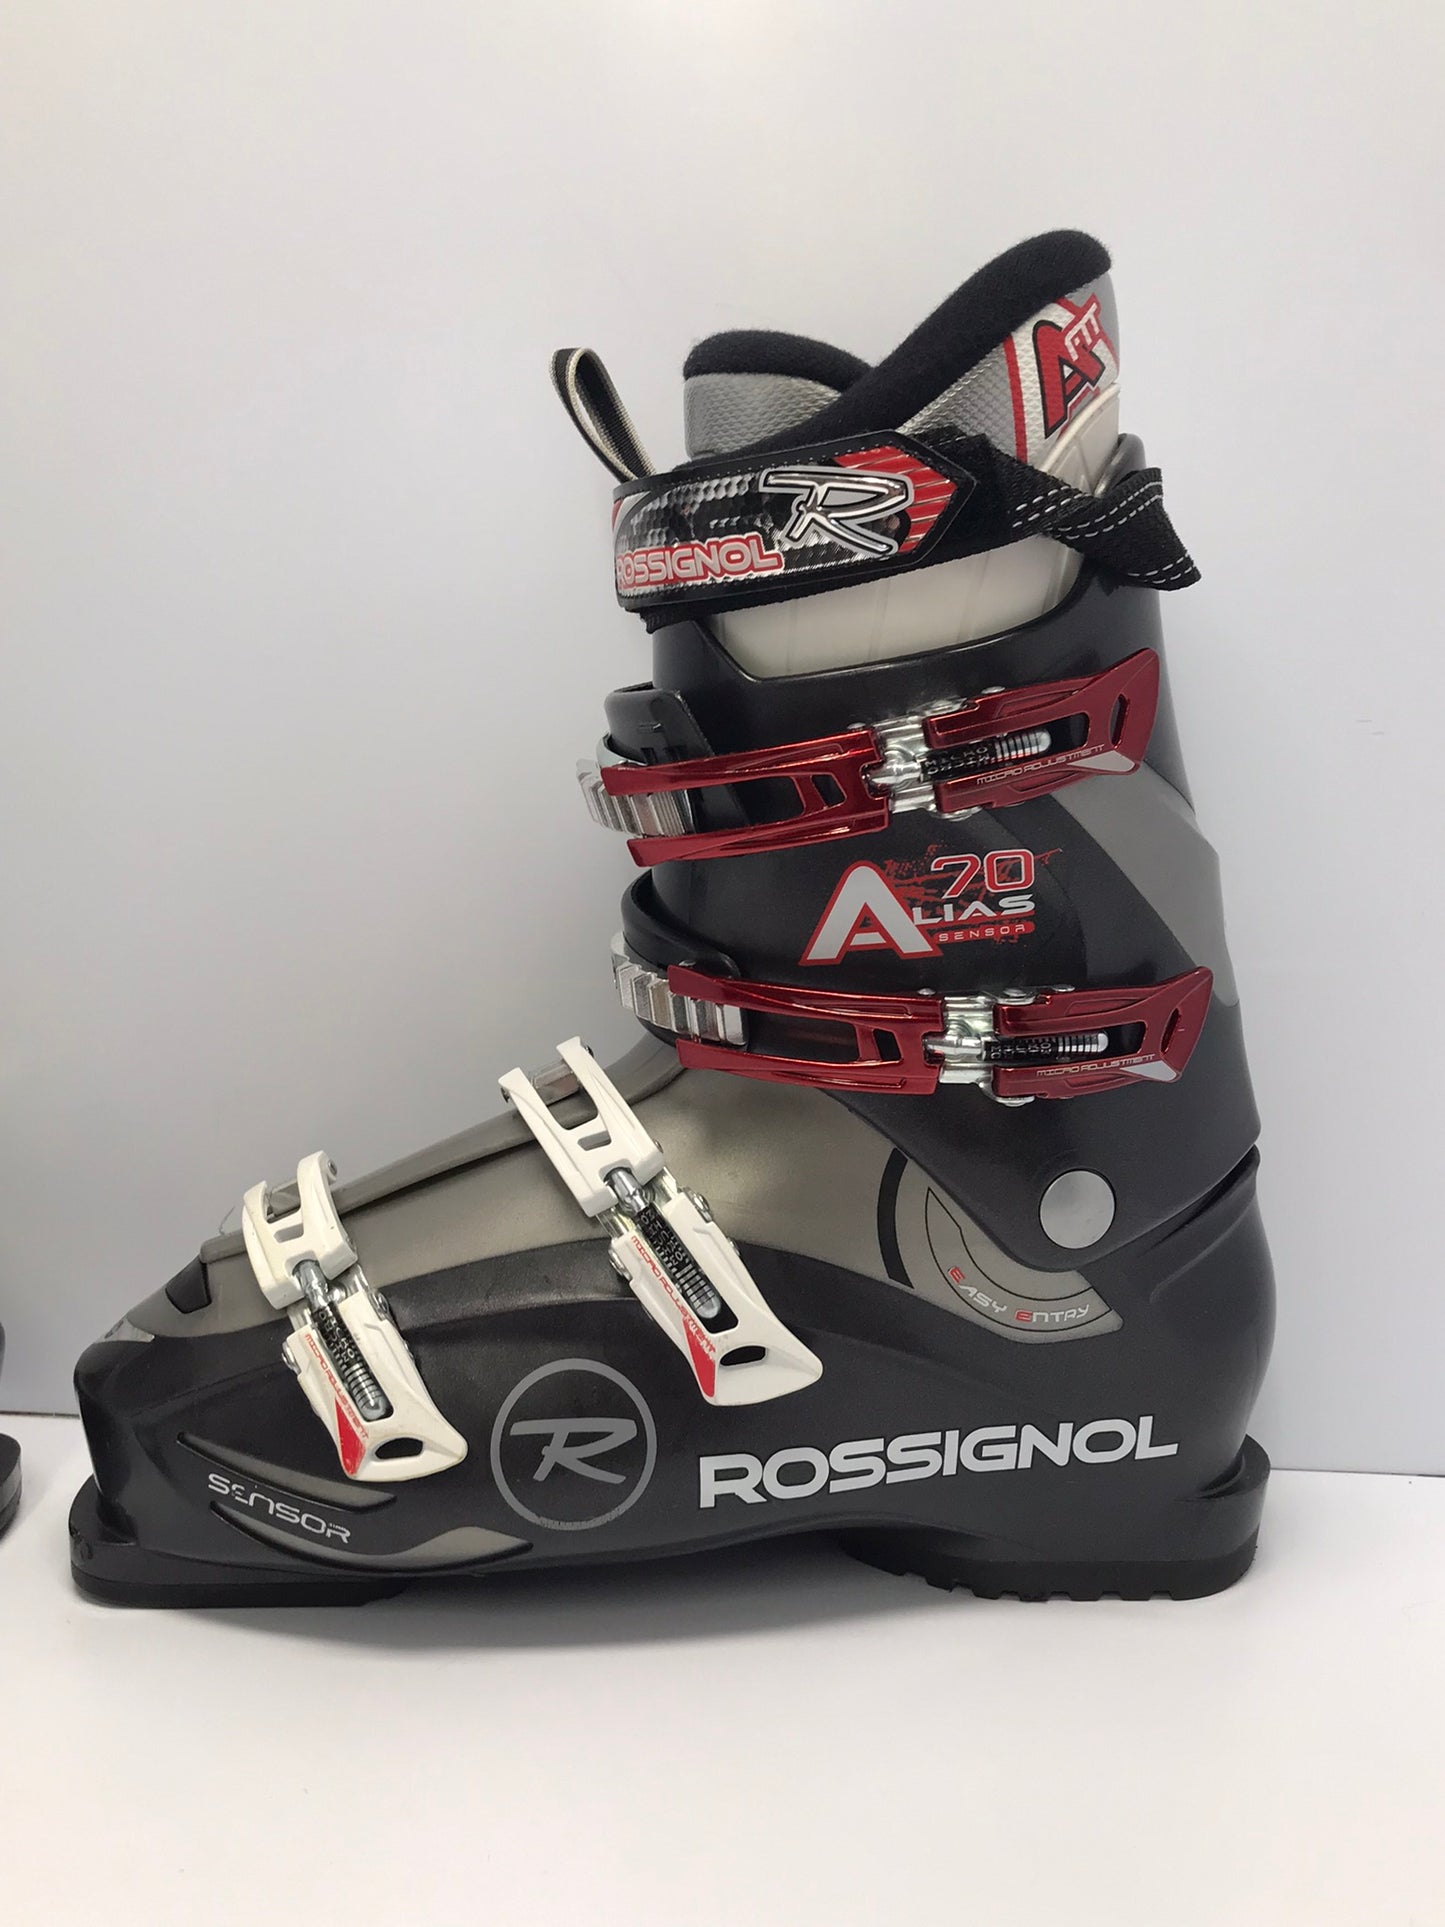 Ski Boots Mondo Size 29.5 Men's Size 11.5 338 mm Rossignol Smoke Grey Chrimson Red Like New